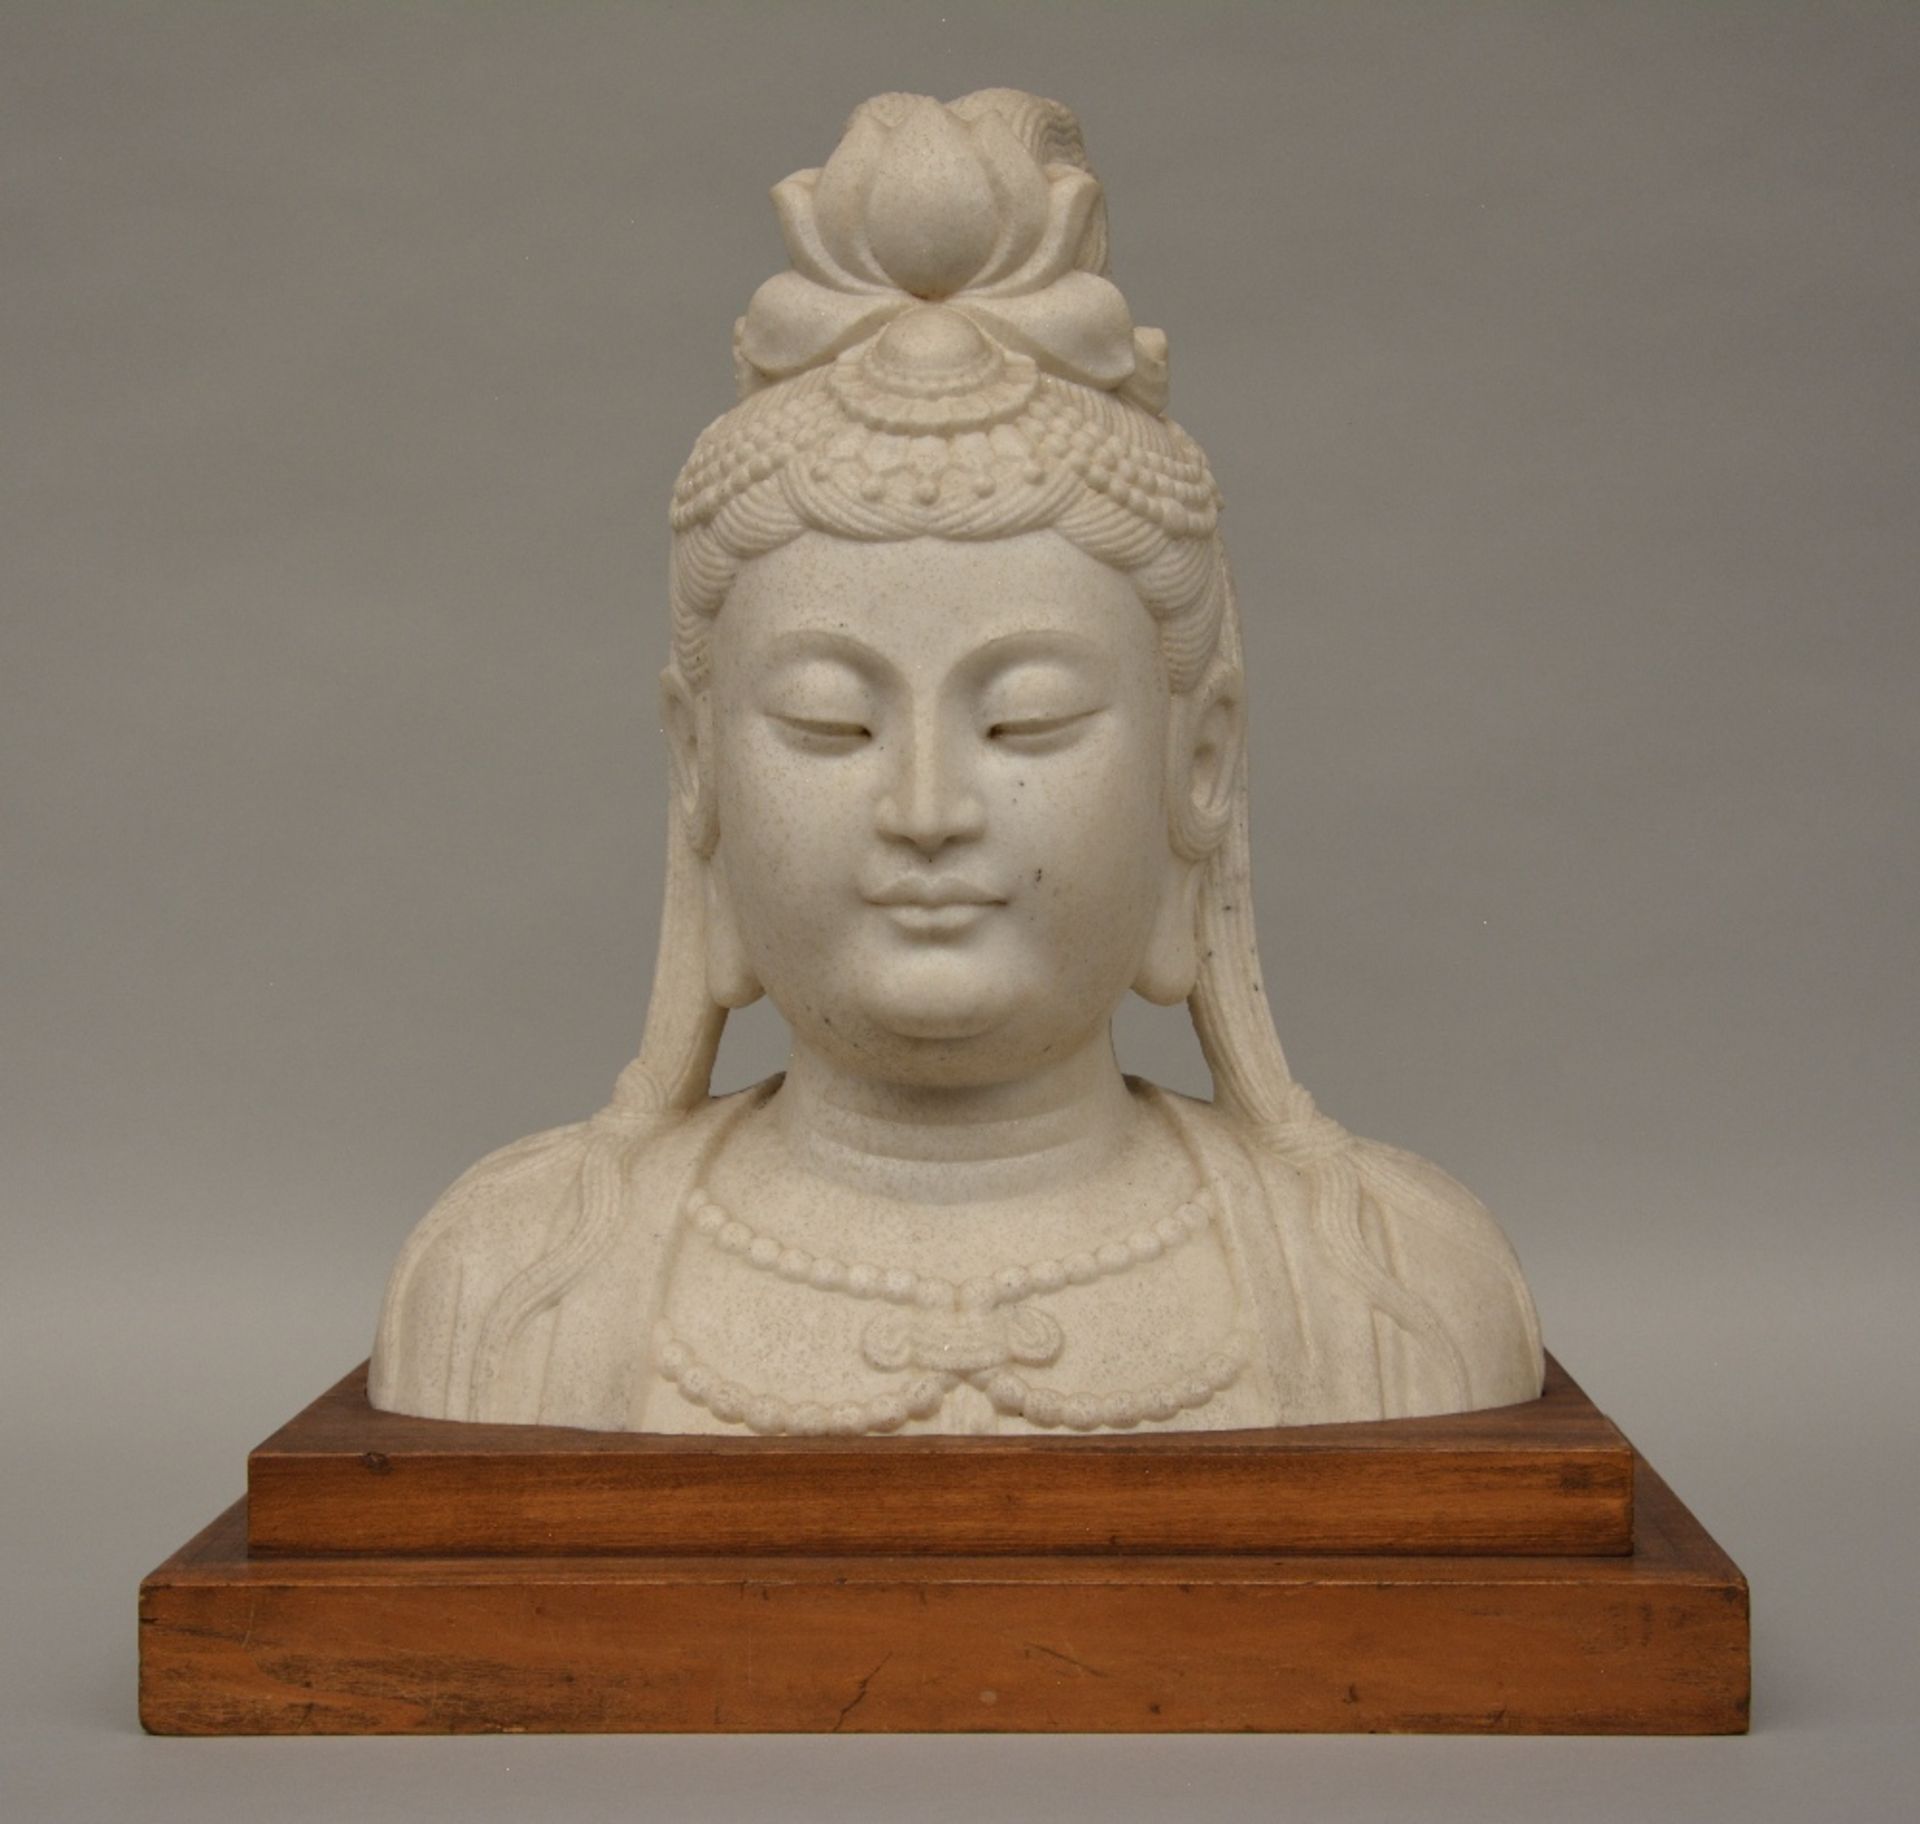 A stone Buddha head, on a wooden base, H 40 cm